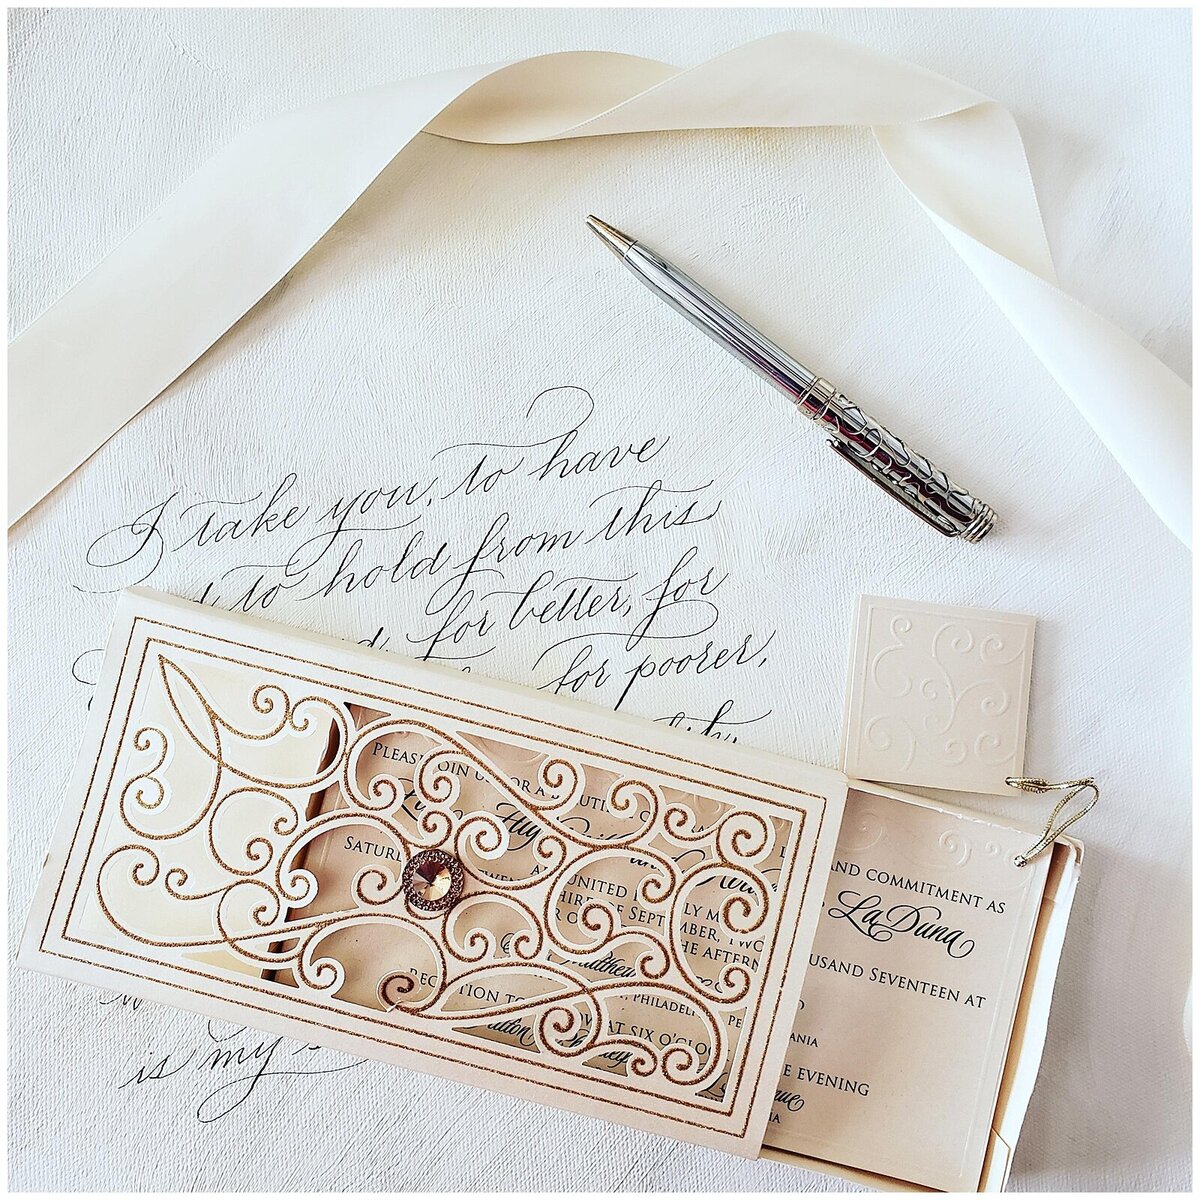 sharpe-stationery-and-printing-ivory-box-wedding-invitation